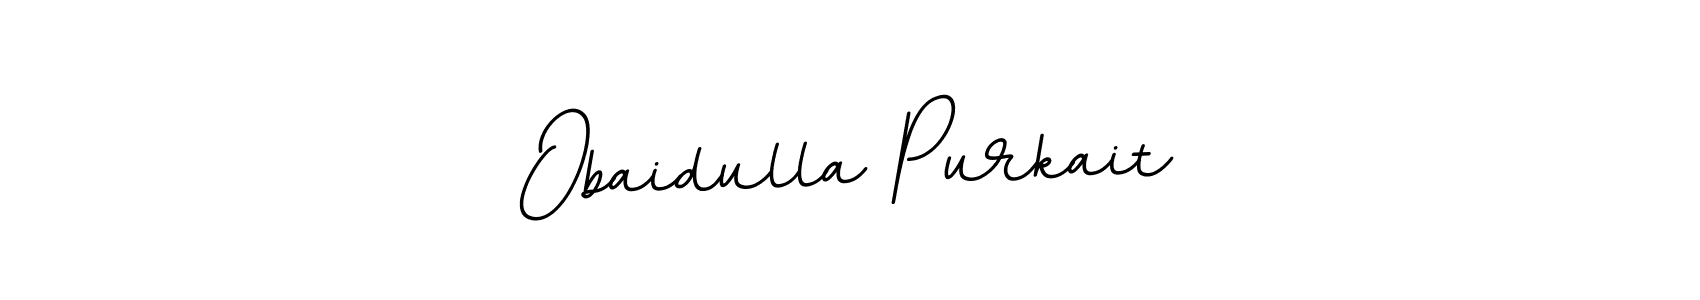 How to Draw Obaidulla Purkait signature style? BallpointsItalic-DORy9 is a latest design signature styles for name Obaidulla Purkait. Obaidulla Purkait signature style 11 images and pictures png